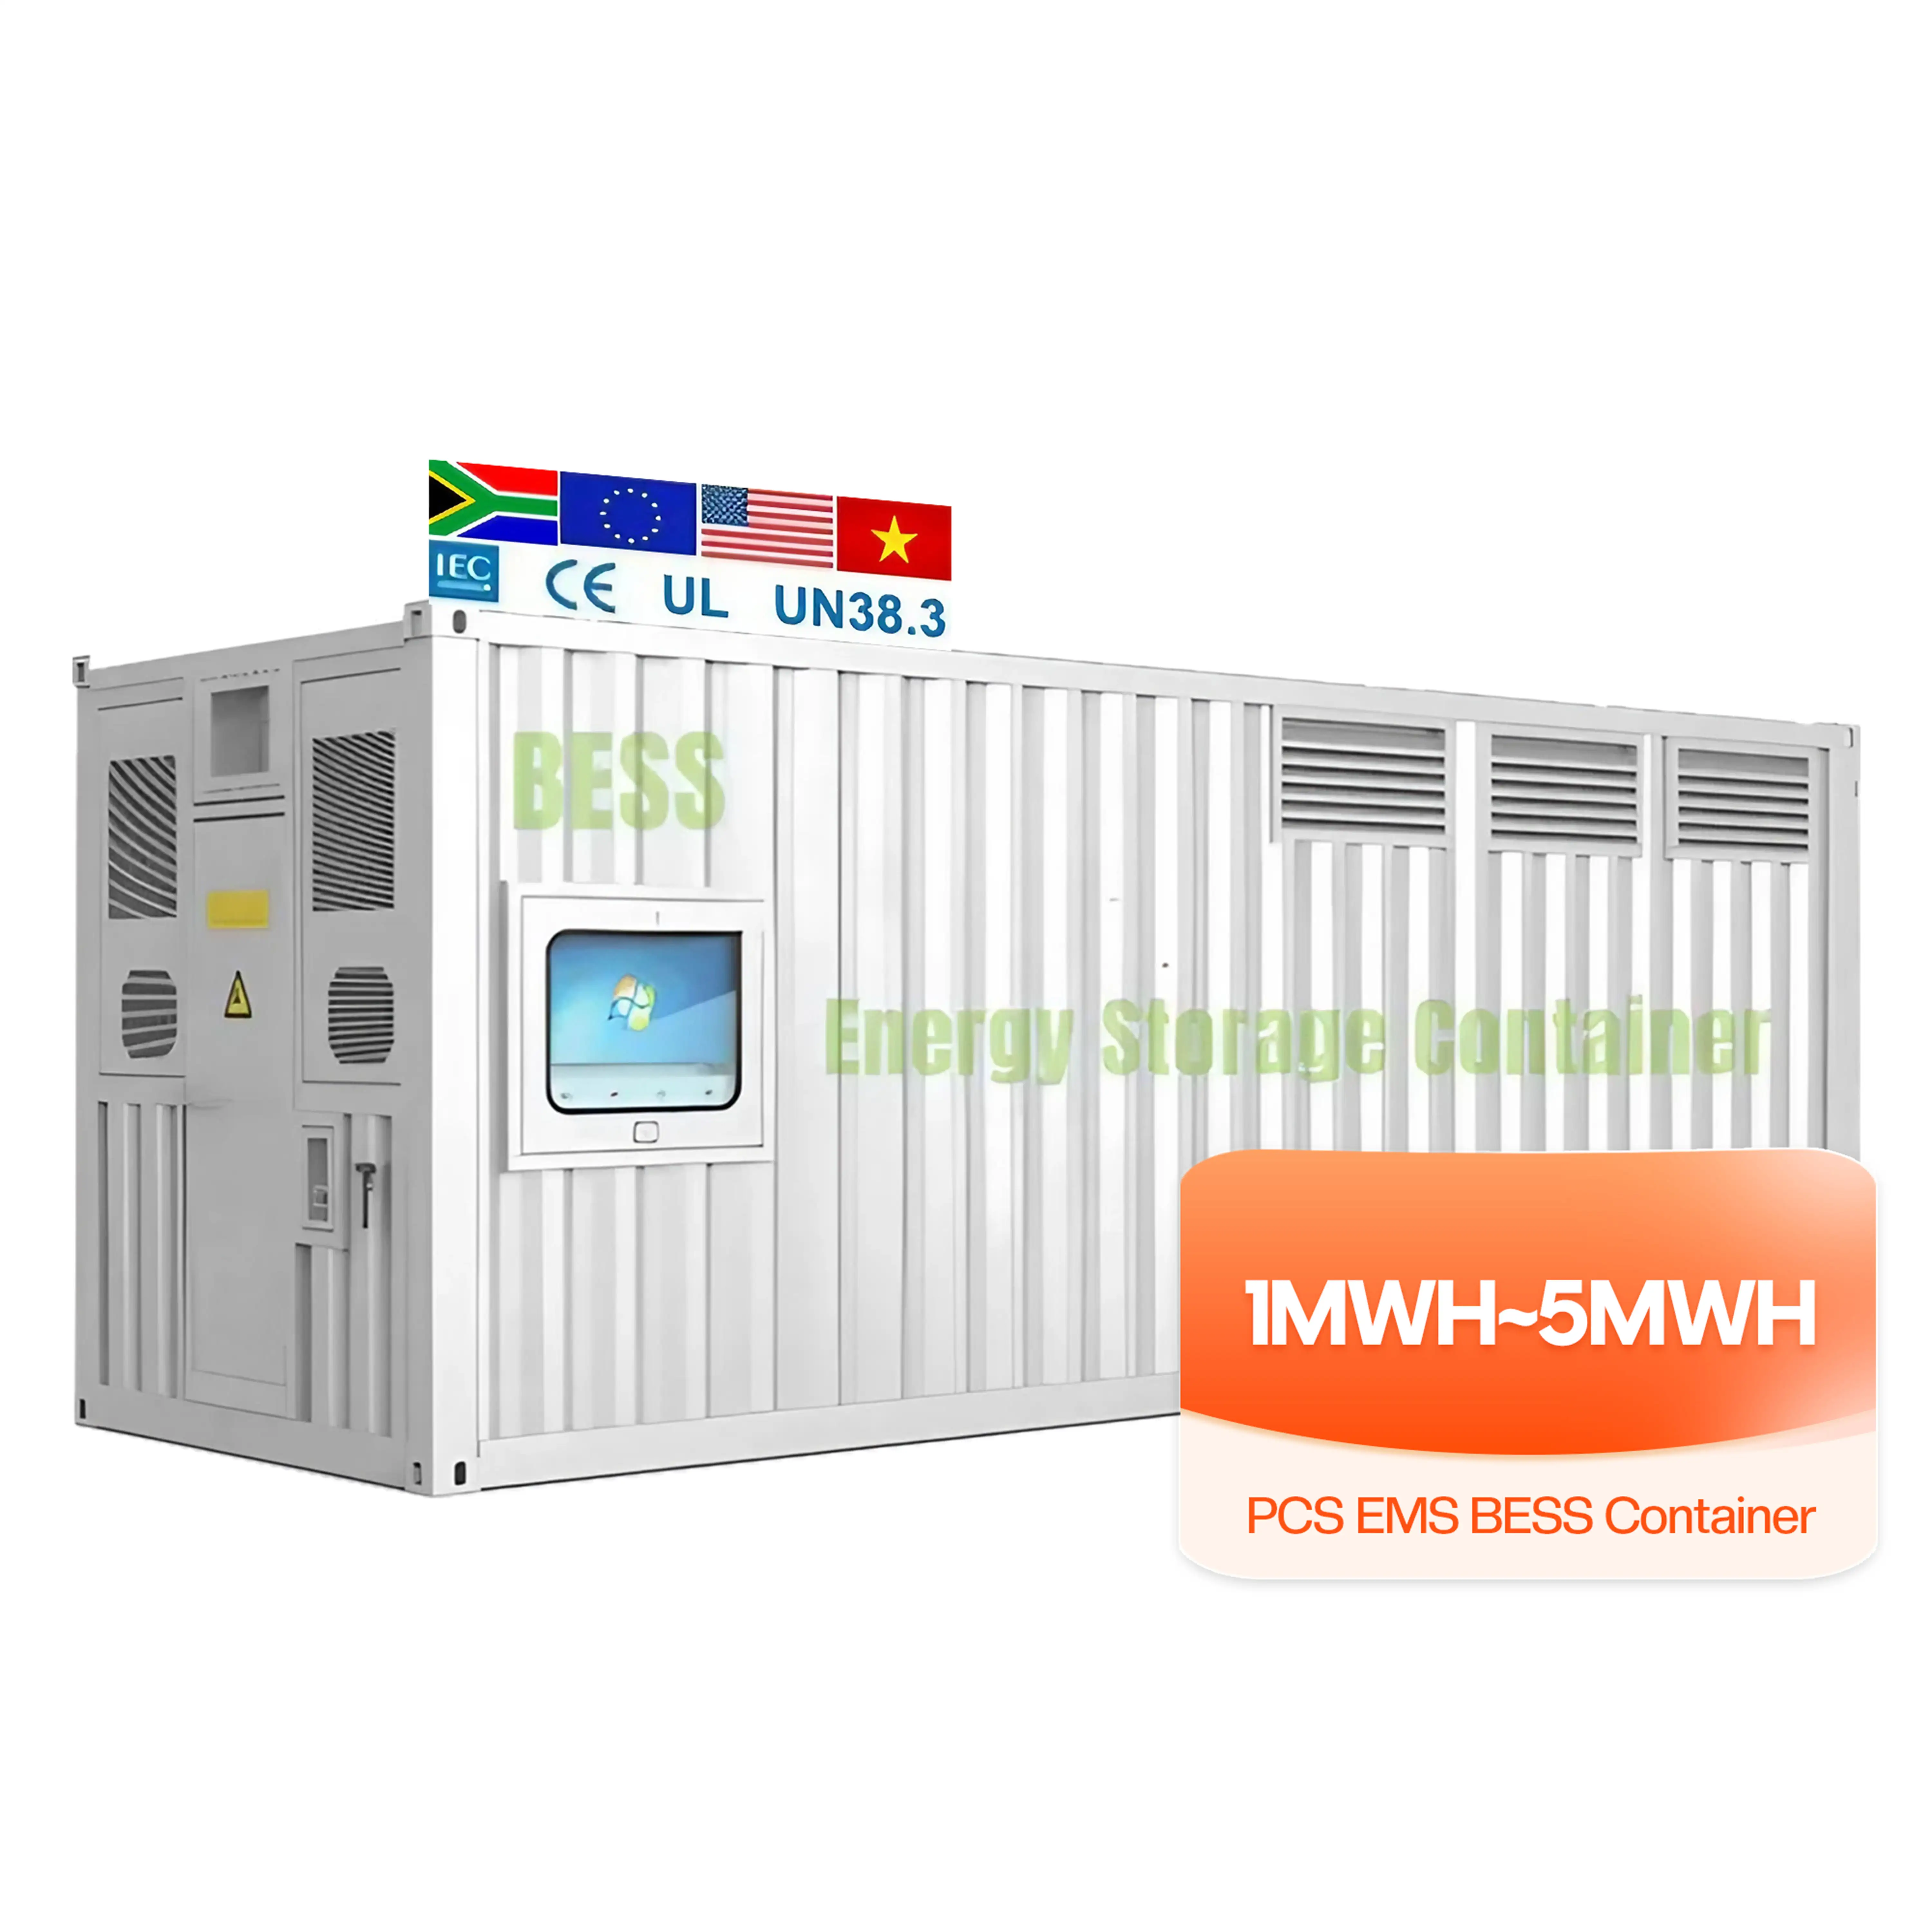 Dawnice 20 ft Energie speicher behälter 215kWh 450kWh 600kWh 700 kWh 800 kWh 810kWh Megawatt Bess-Batterie